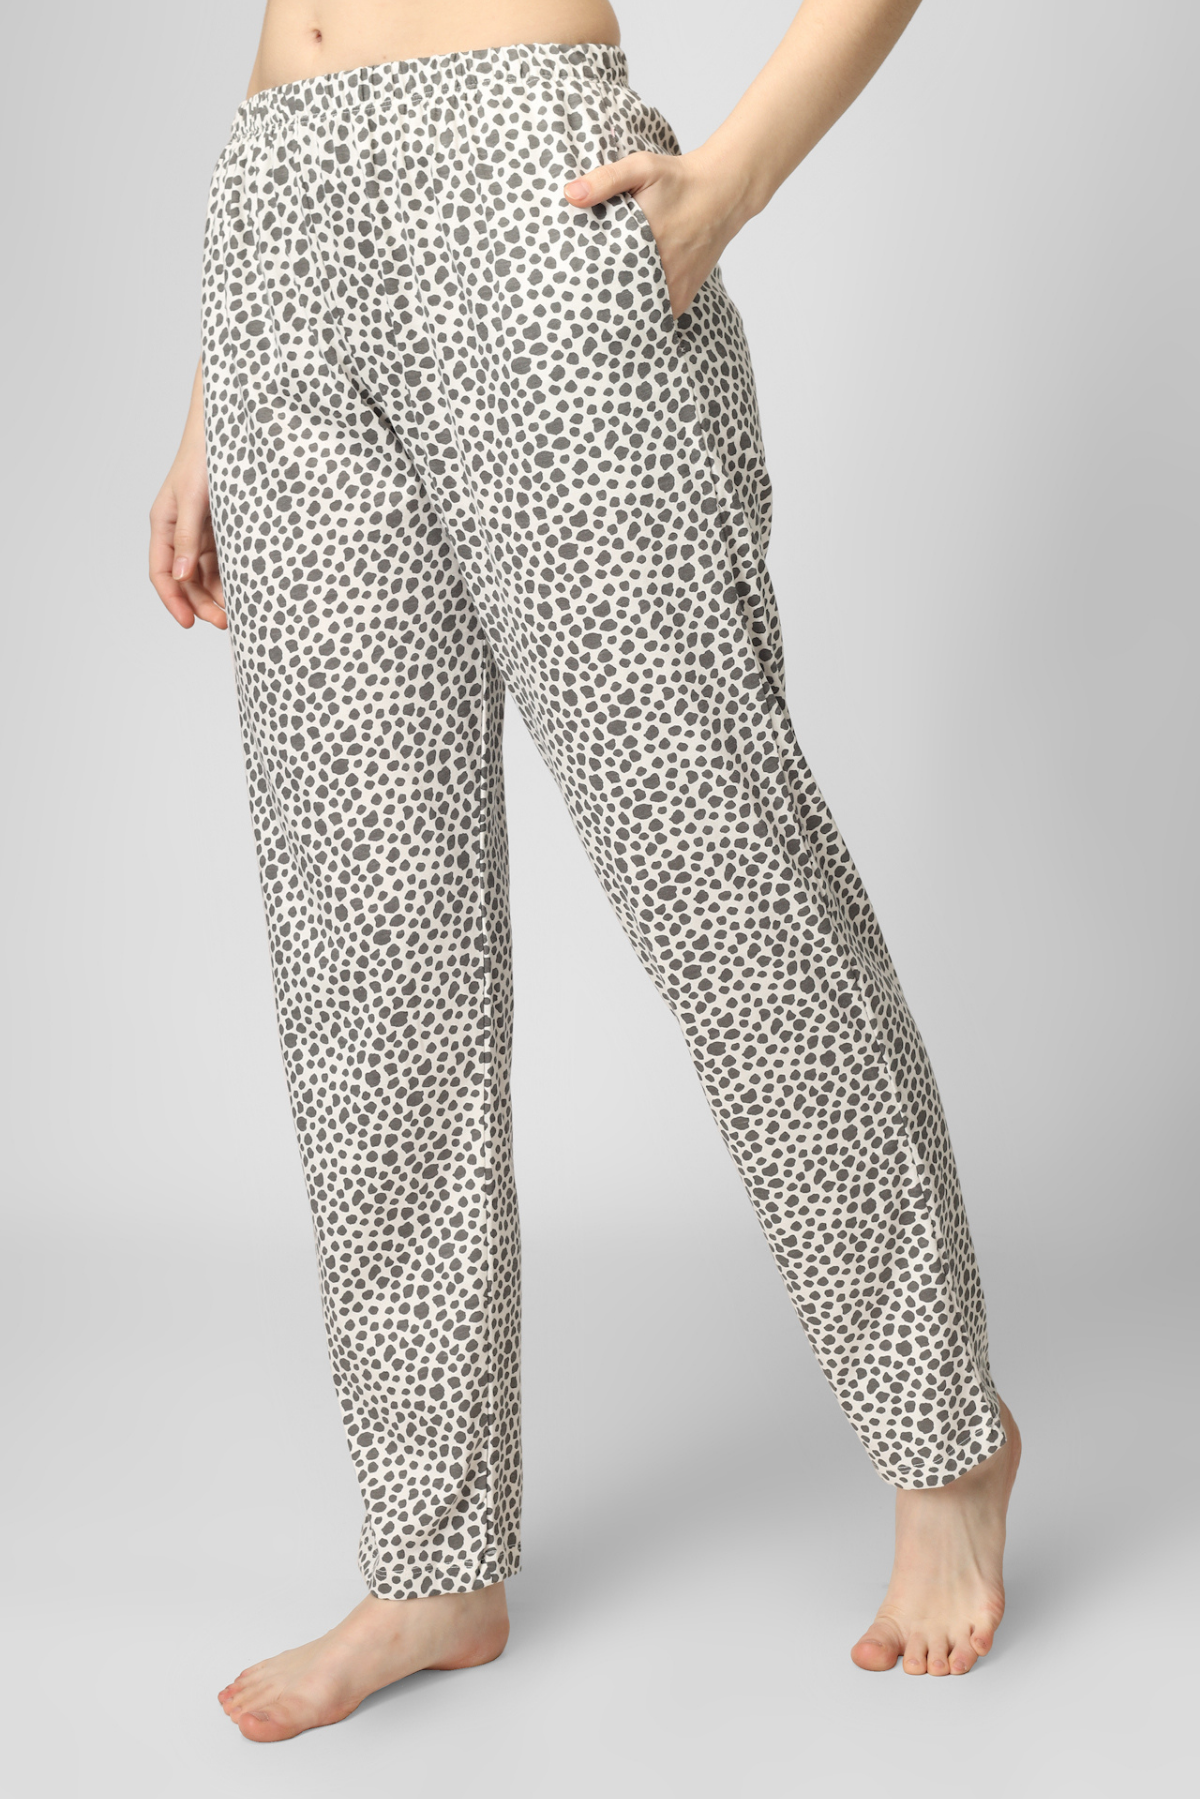 Coral Lil Meow Naps Pyjama Set For Women 7